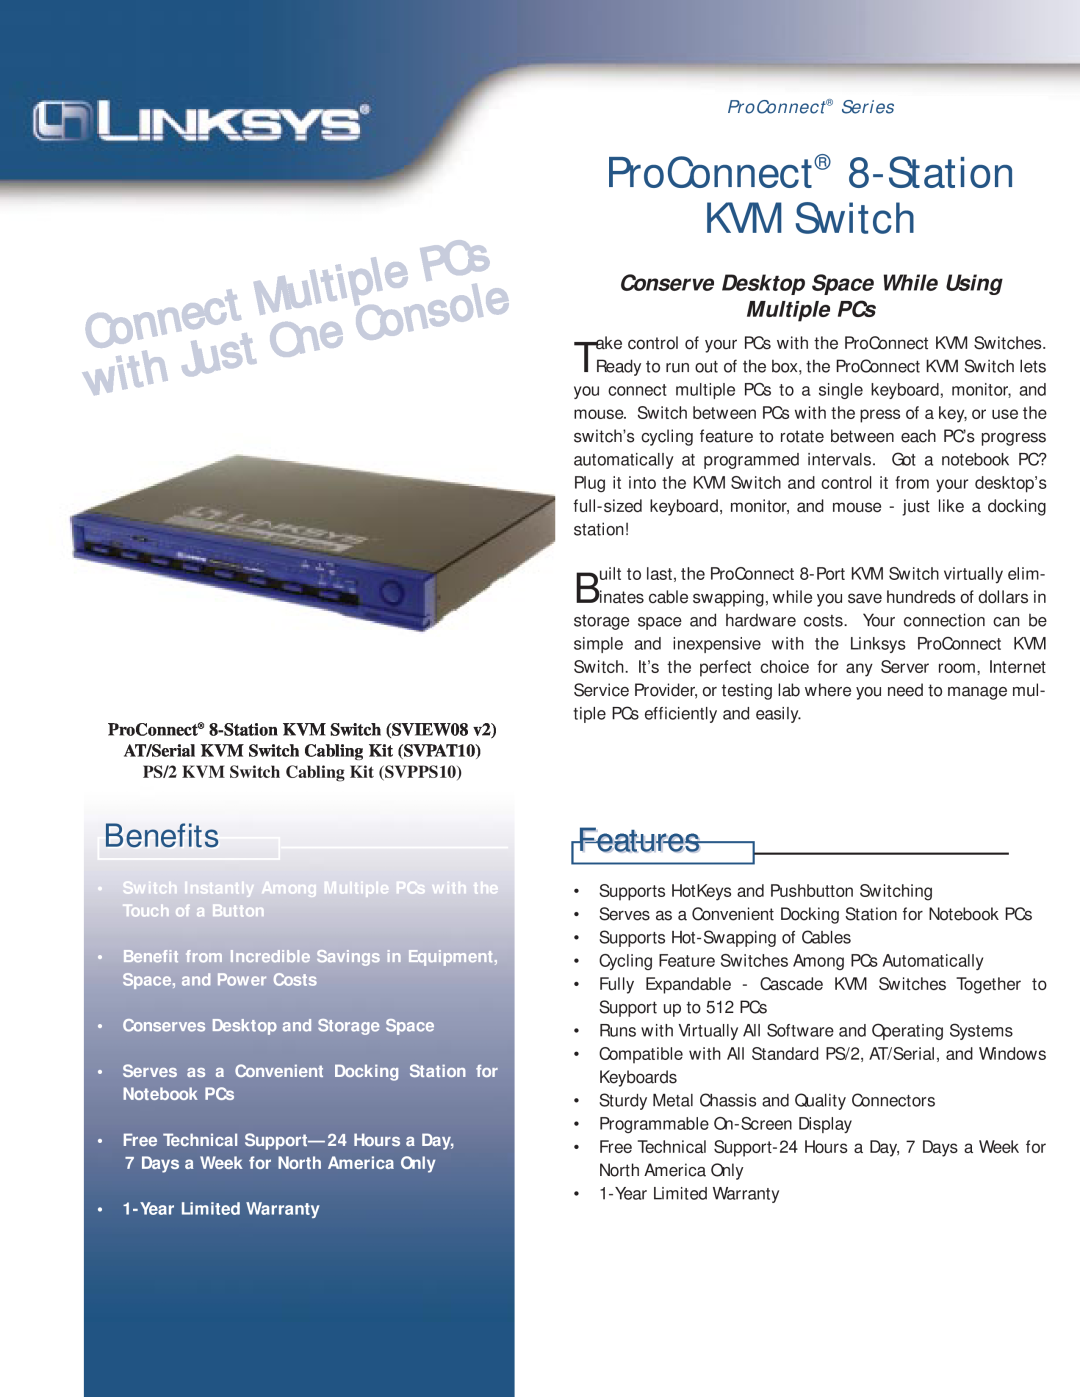 Linksys SVPAT10, SVPPS10 warranty ith J, ProConnect 8-Station KVM Switch, Benefits, Features 